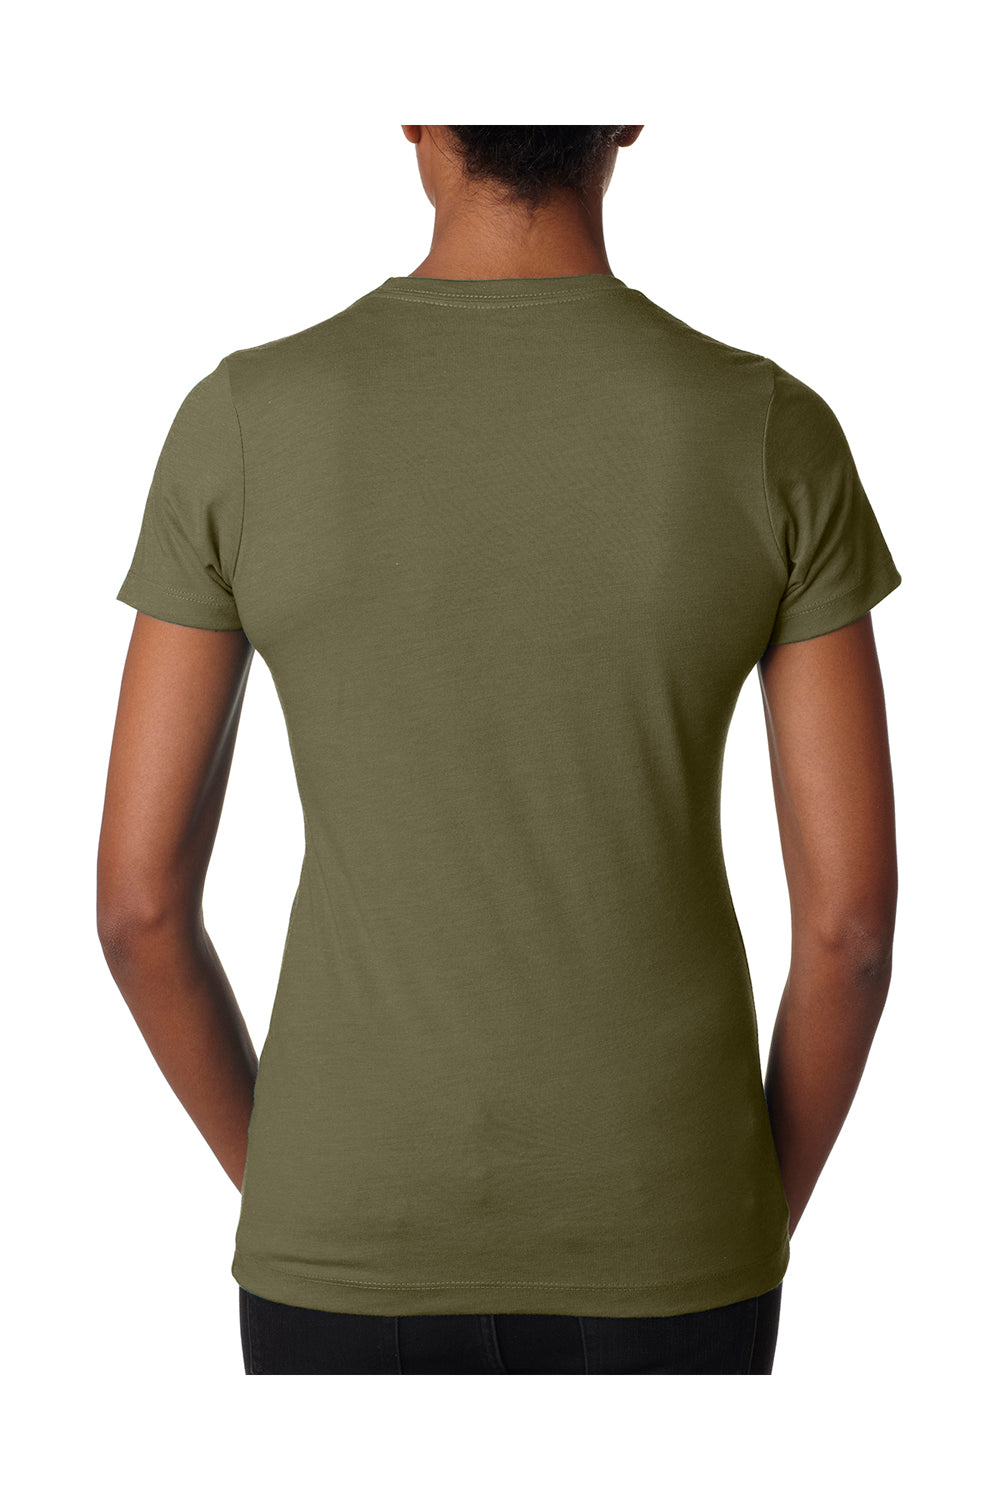 Next Level 6610 Womens CVC Jersey Short Sleeve Crewneck T-Shirt Military Green Back